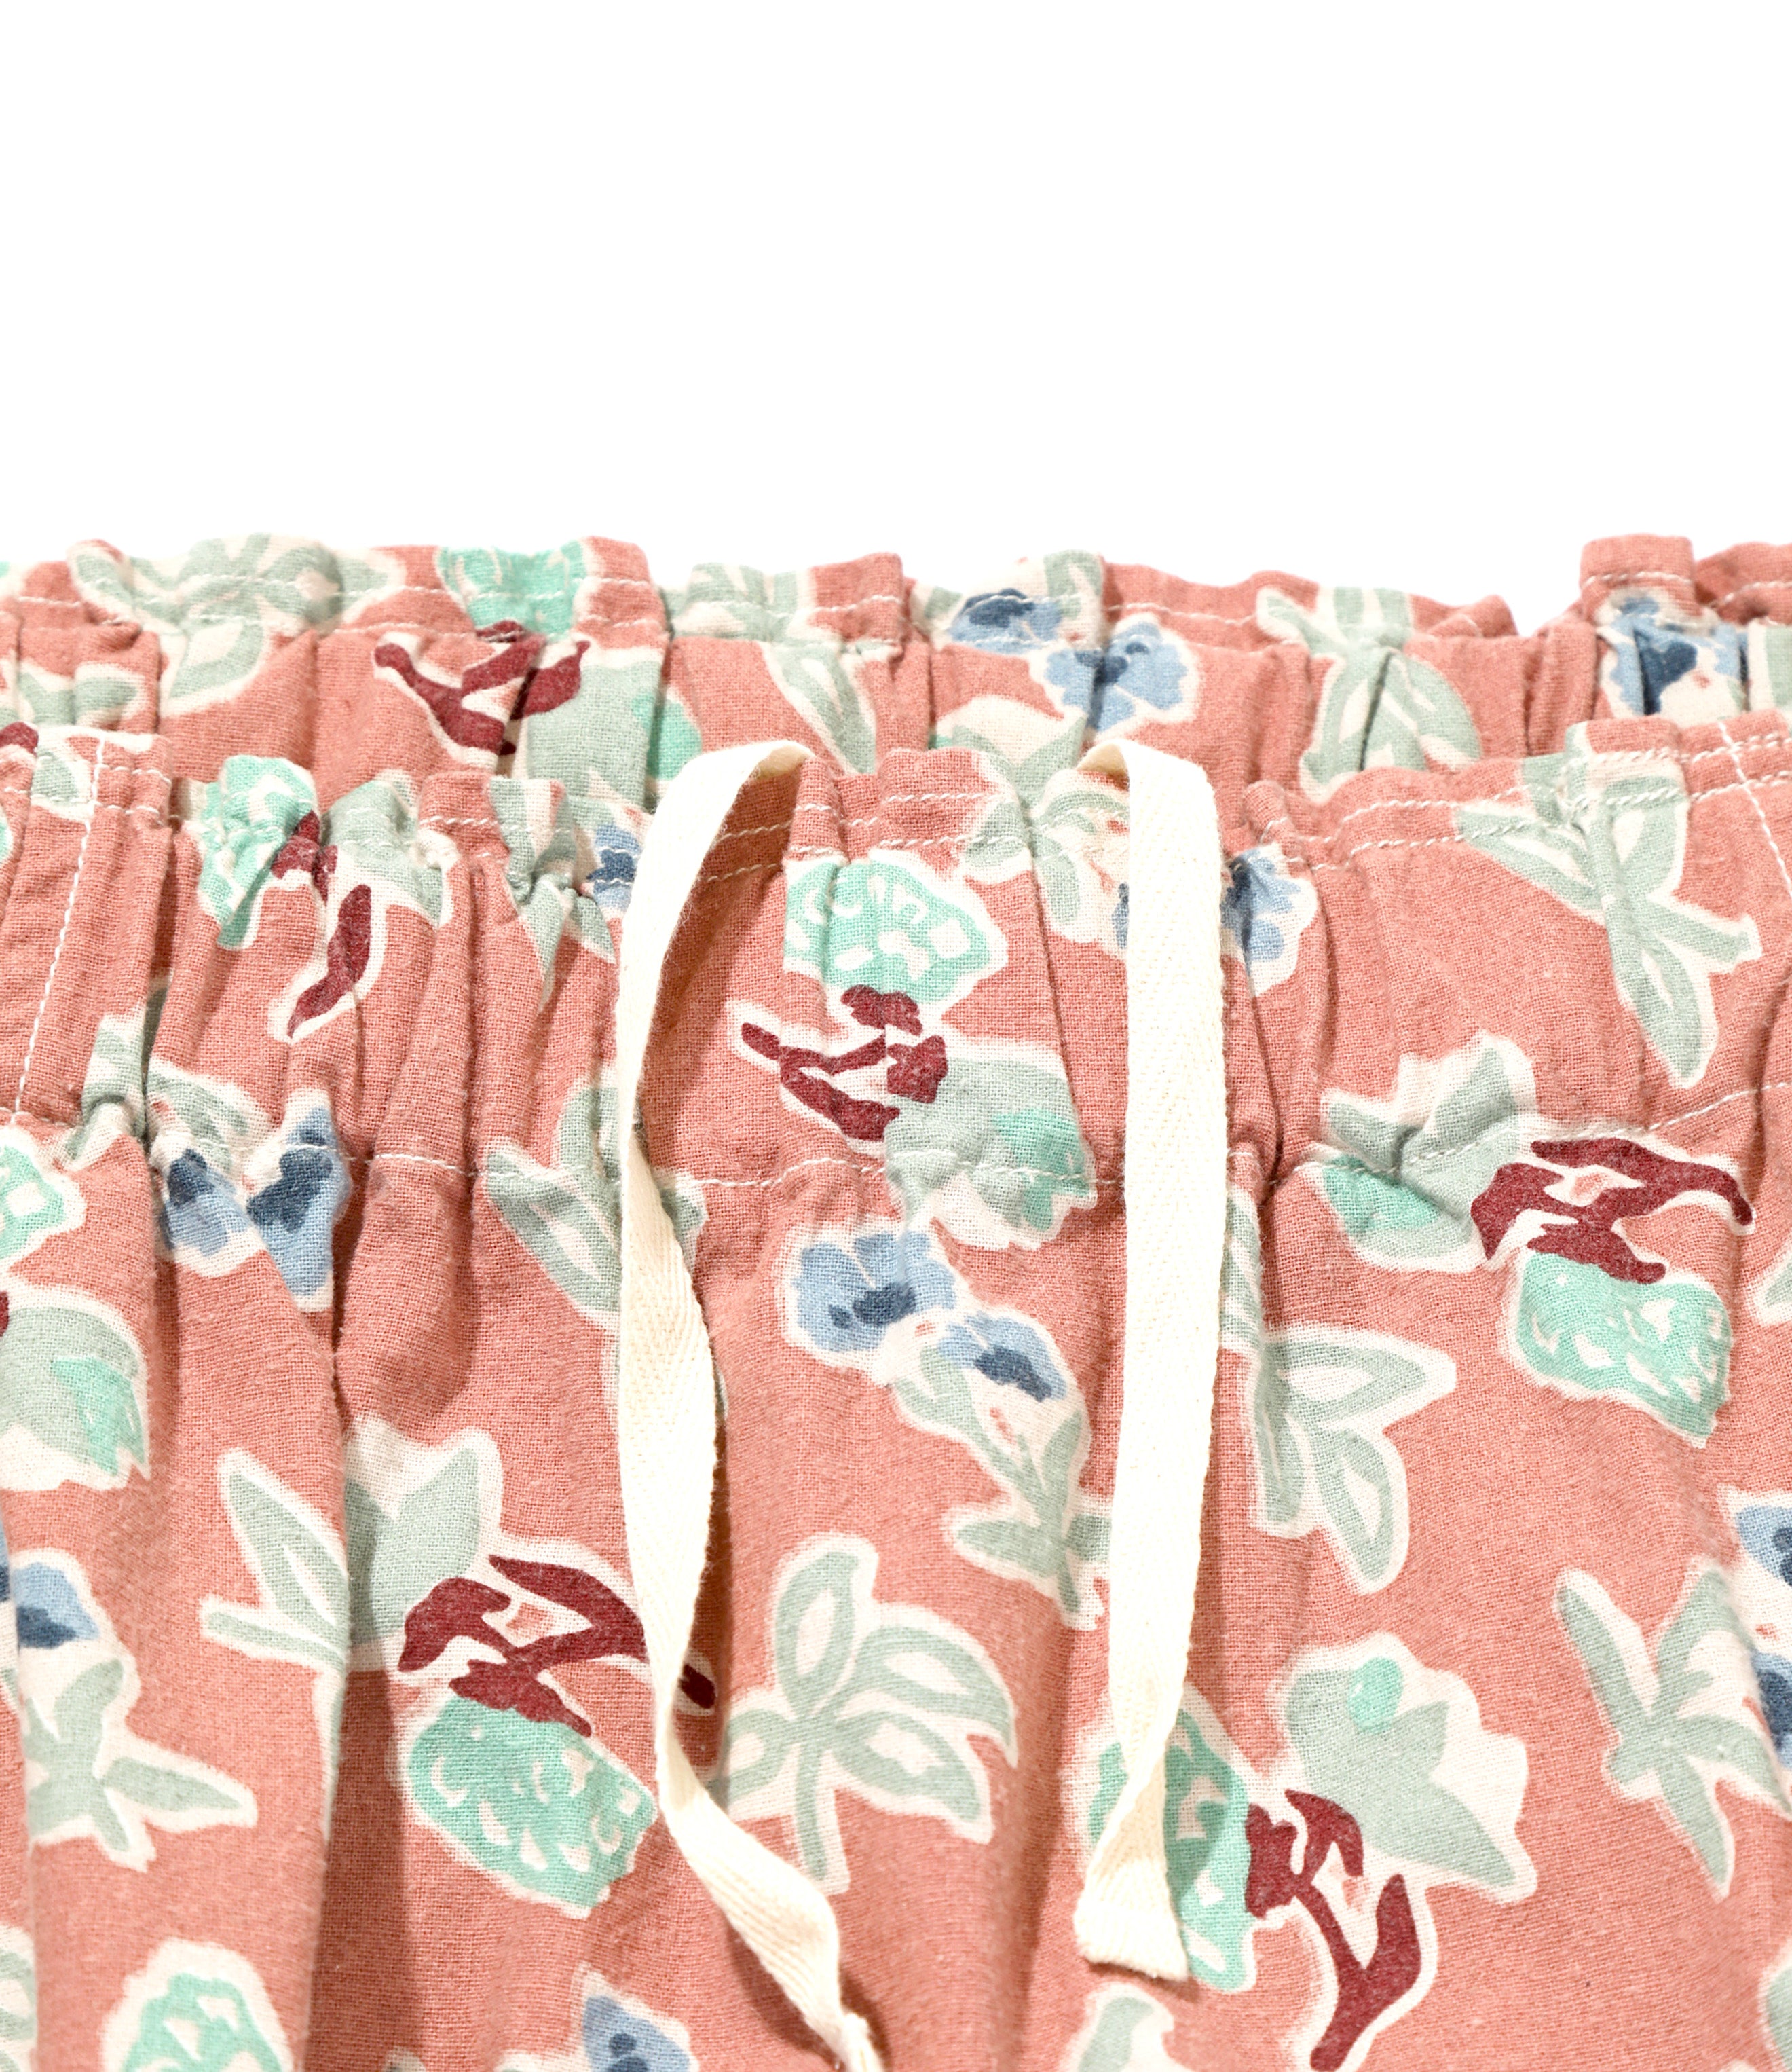 Women's Army String Skirt - Pink - Flannel Pt. / Botanical